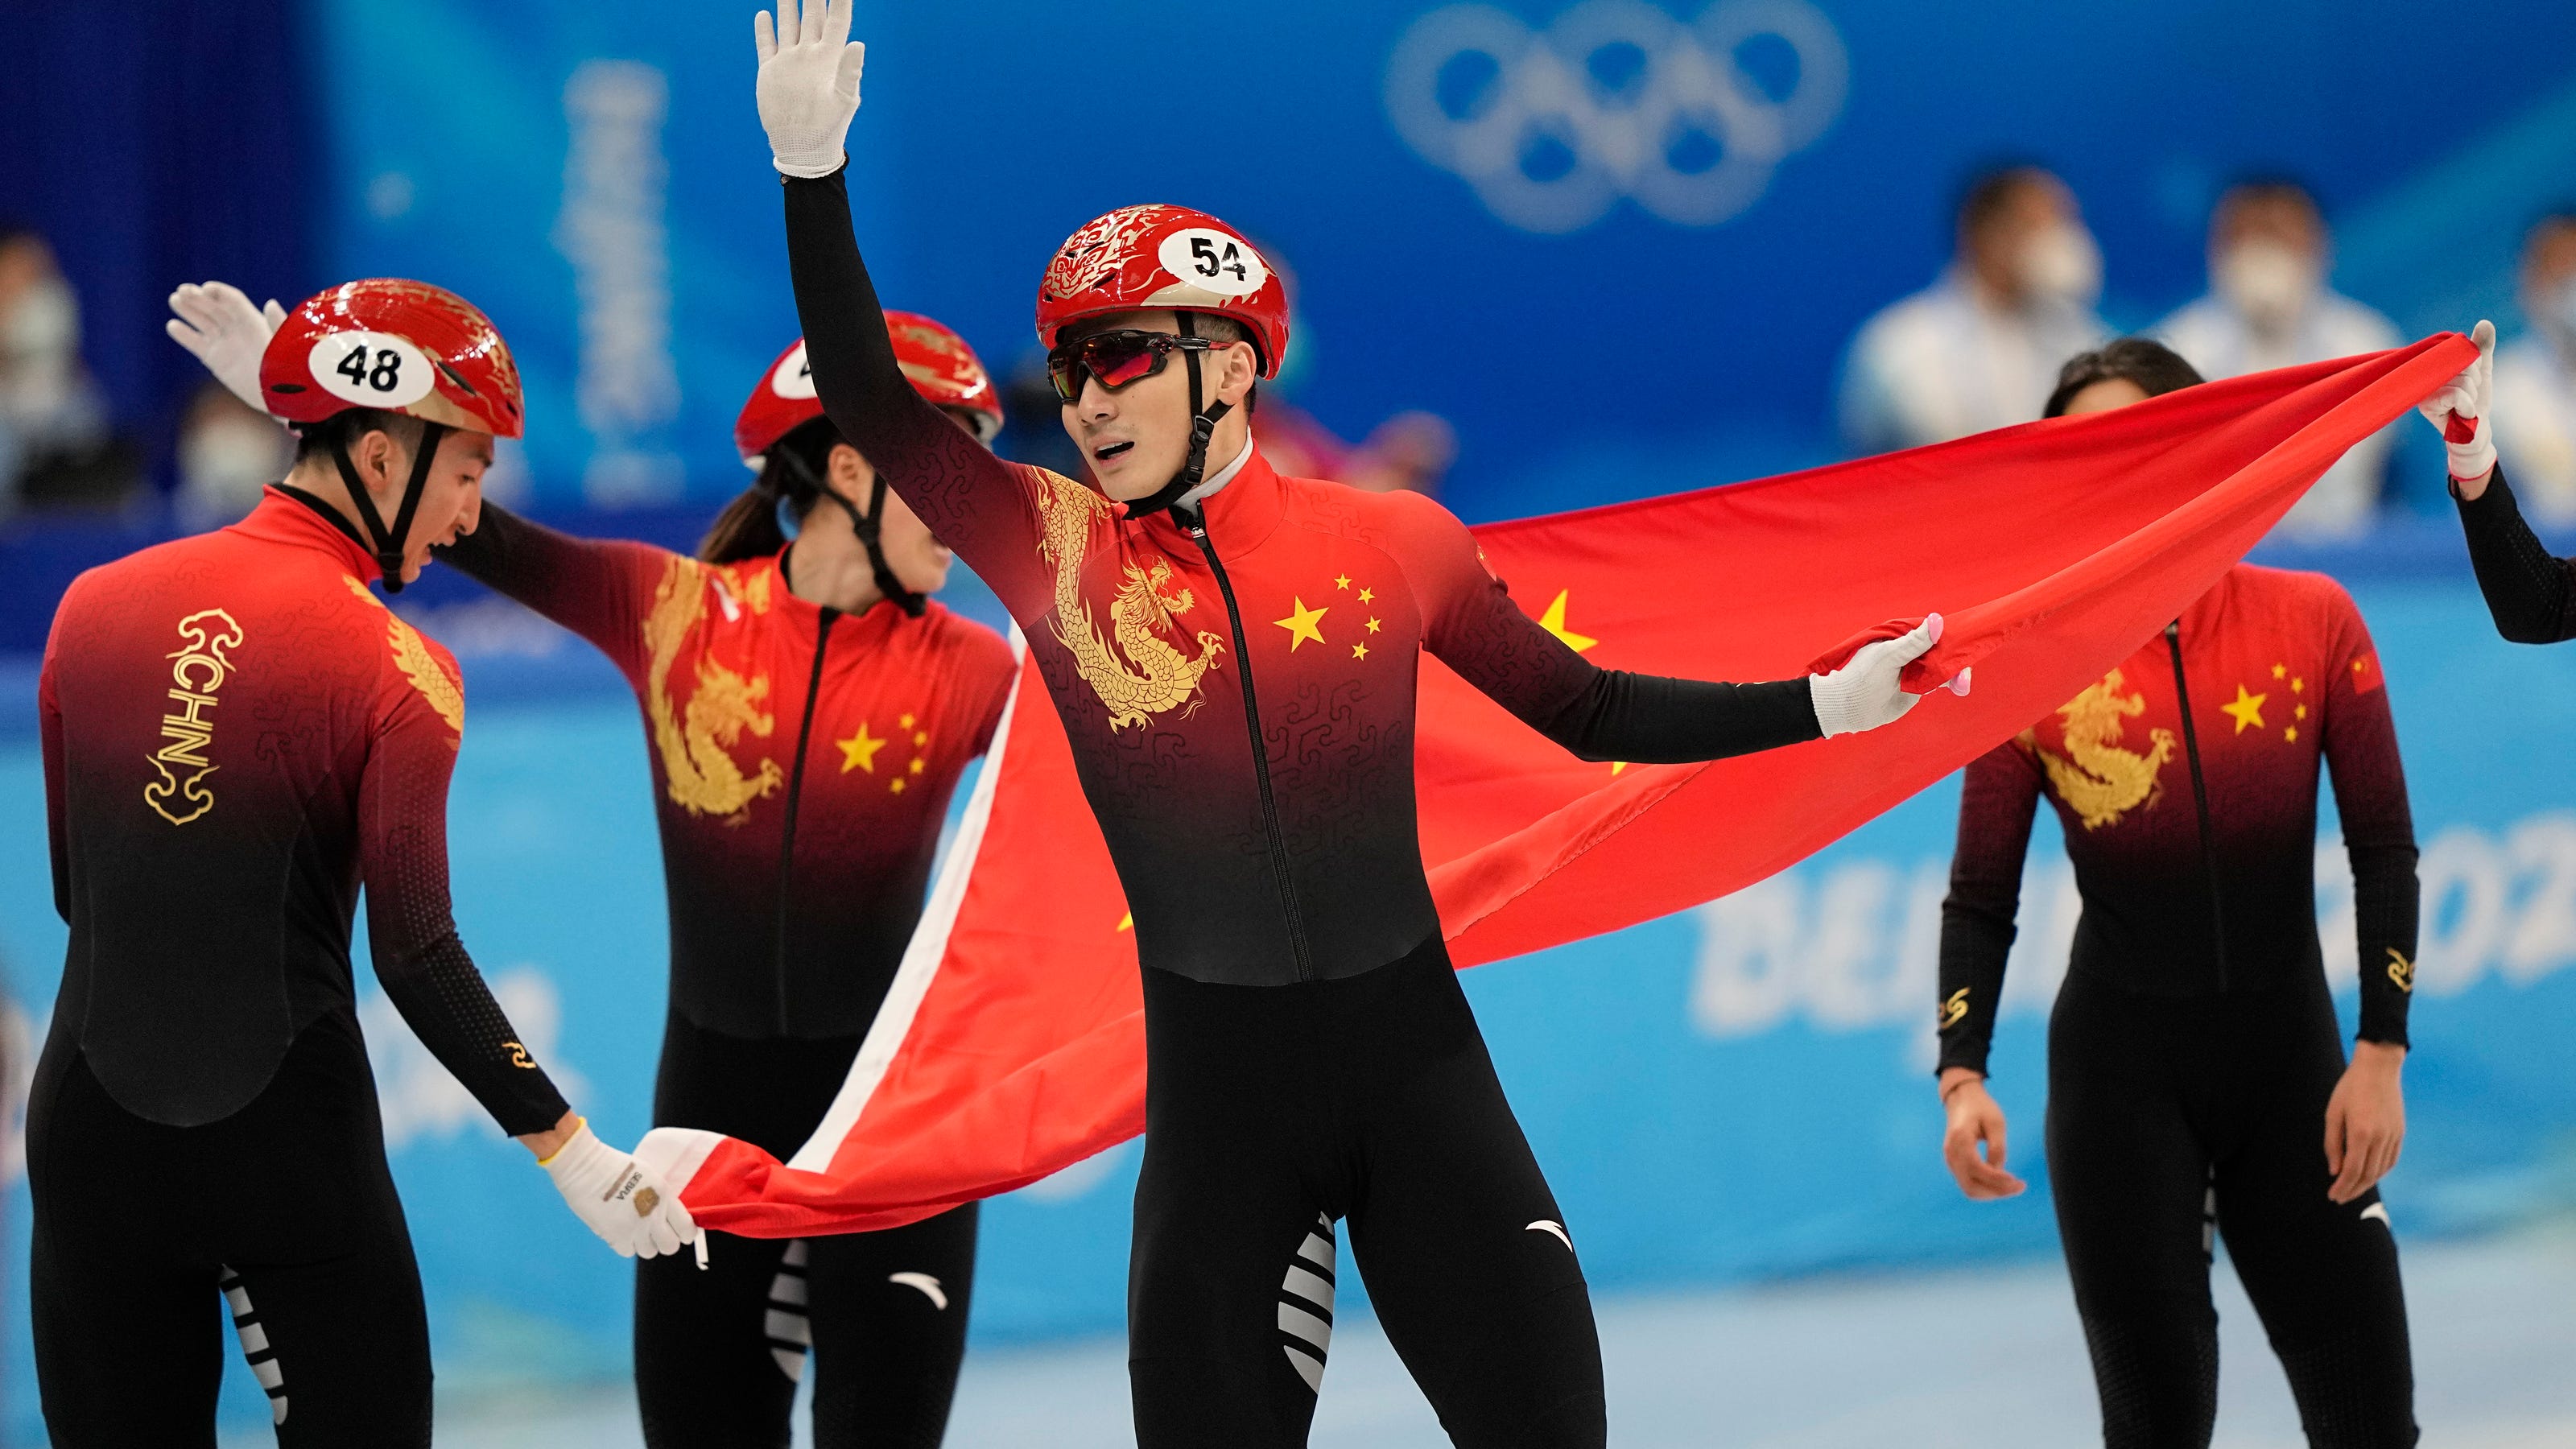 Шорт трек олимпийские. Шорт трек Китай на Олимпийских играх 2022. Шорт трек Пекин. Beijing 2022 short track Speed Skating. Сборная Китая на Олимпиаде в Пекине 2022.